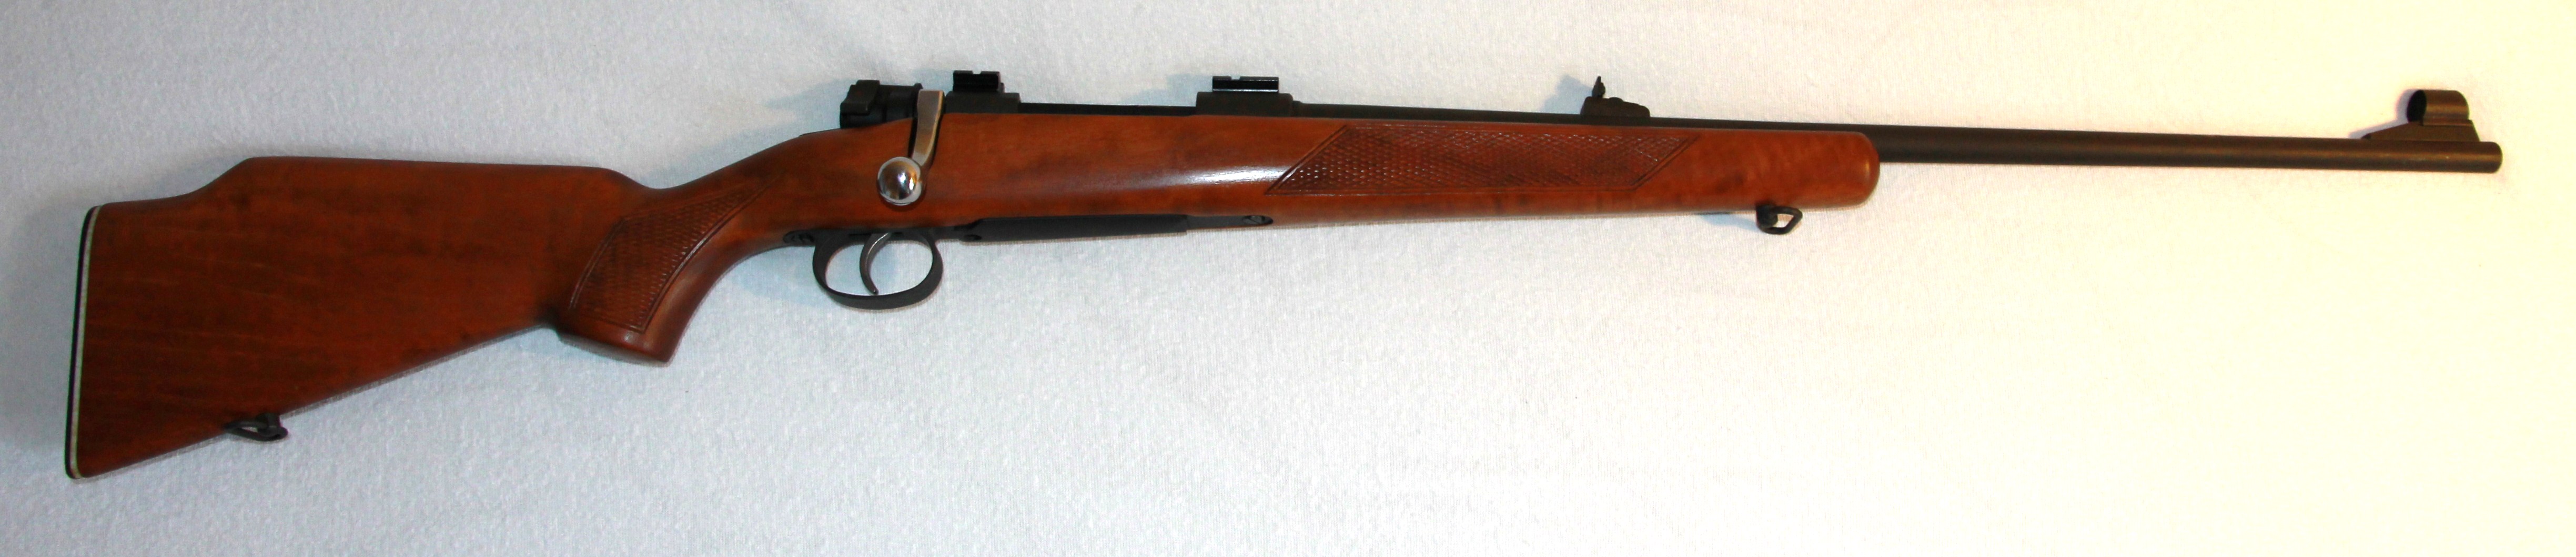 ./guns/rifle/bilder/Rifle-Kongsberg-Mauser-M83-0280-1.JPG